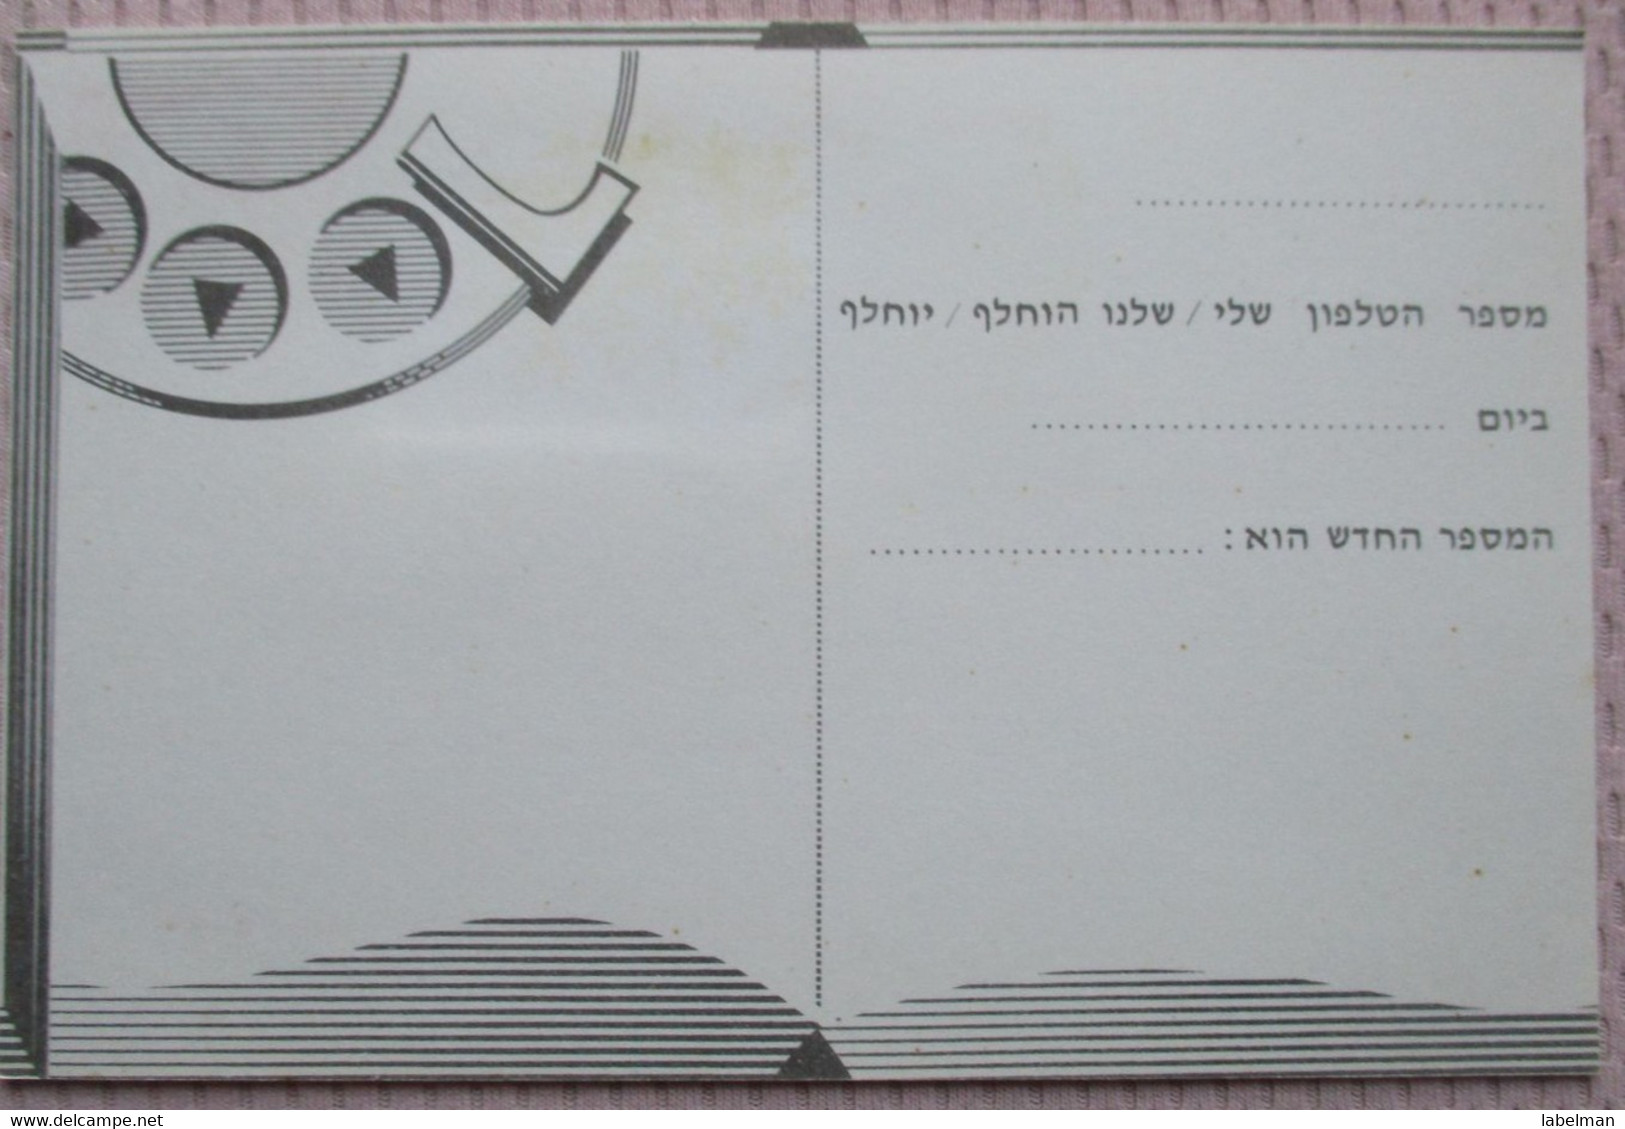 ISRAEL POSTAL AUTHORITY INLAND PREPAID POSTCARD POSTKARTE CARD ANSICHTSKARTE CARTOLINA CARTE POSTALE PC CP AK - Cartes-maximum